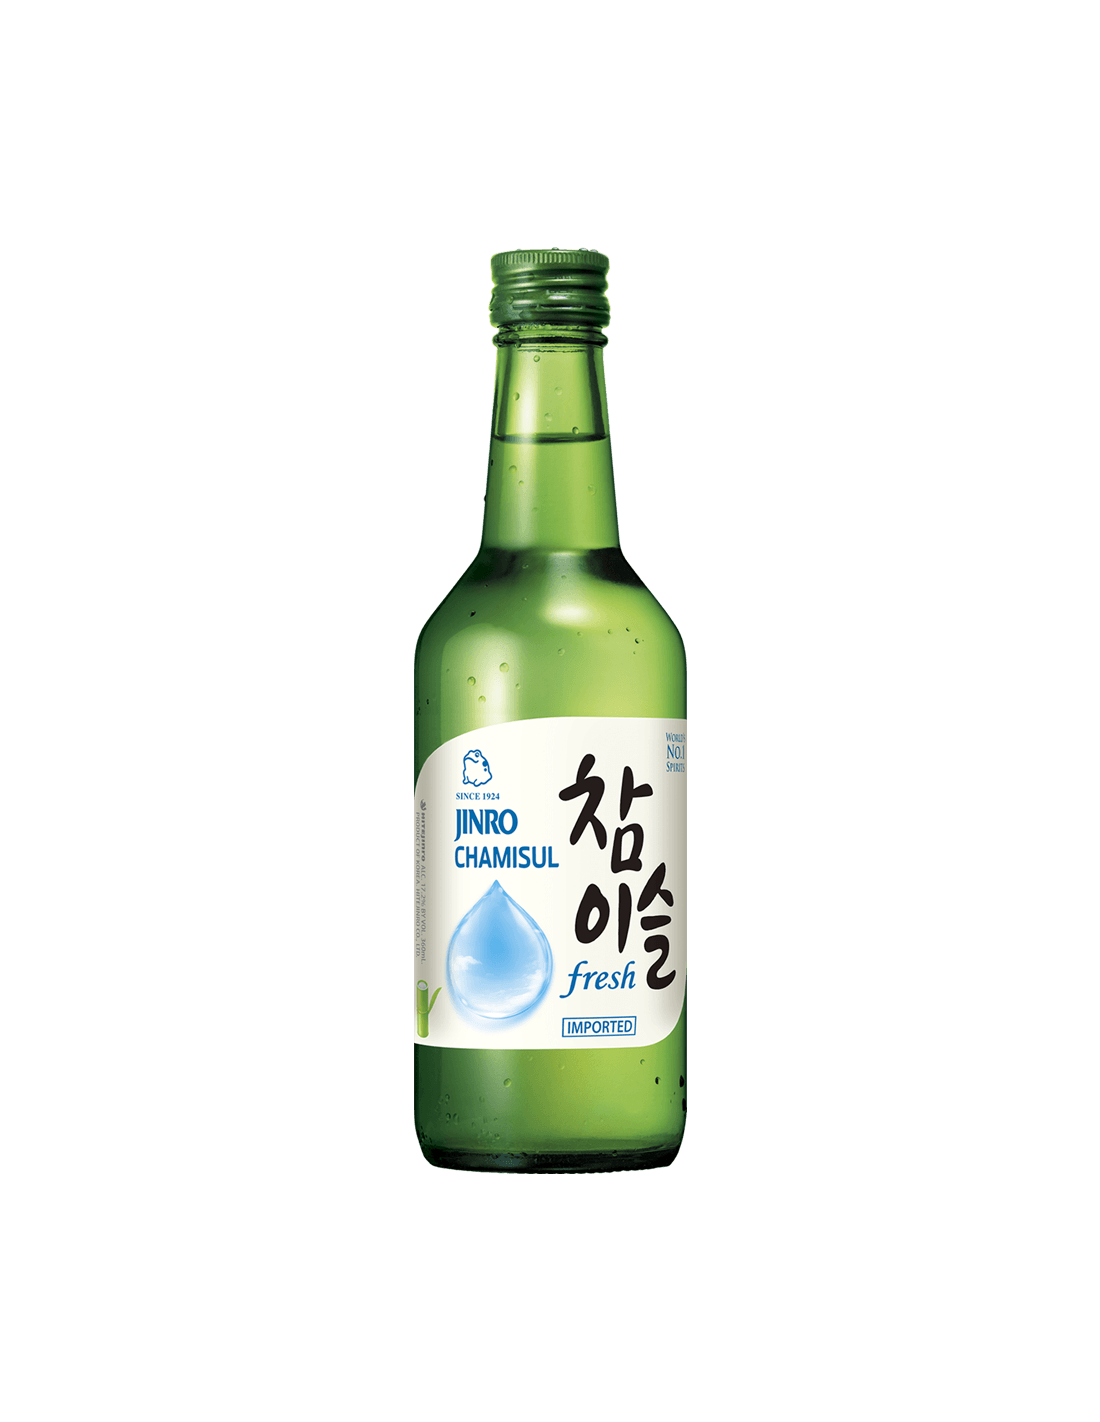 Bautura traditionala Jinro Soju Chamisul Fresh, 24% alc., 0.36L, Coreea